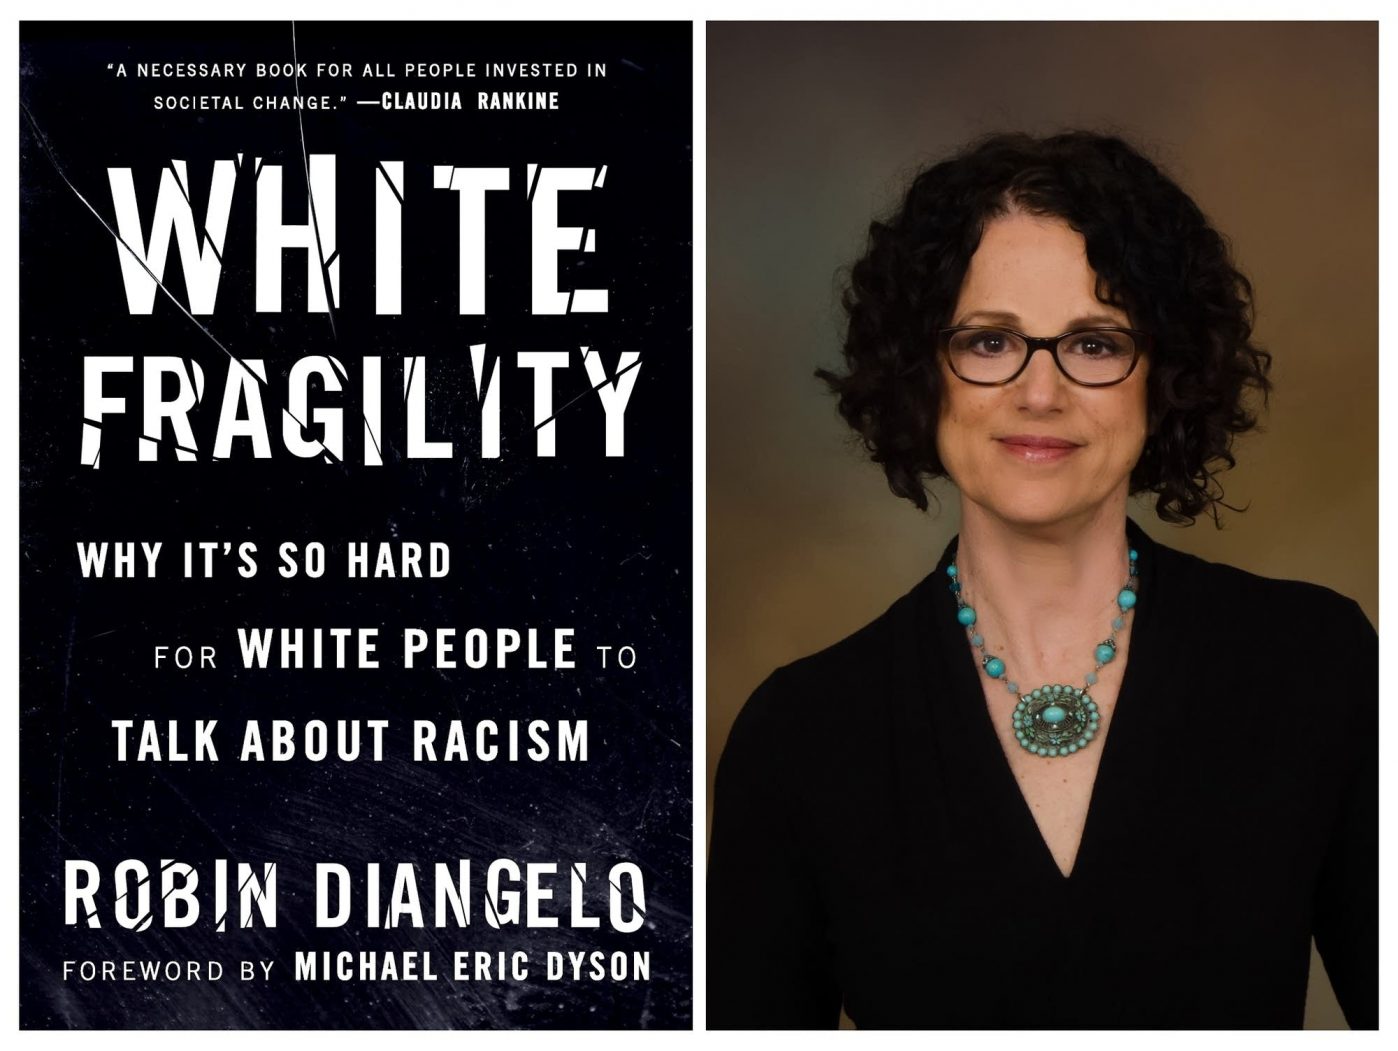 Robin DiAngelo's book White Fragility